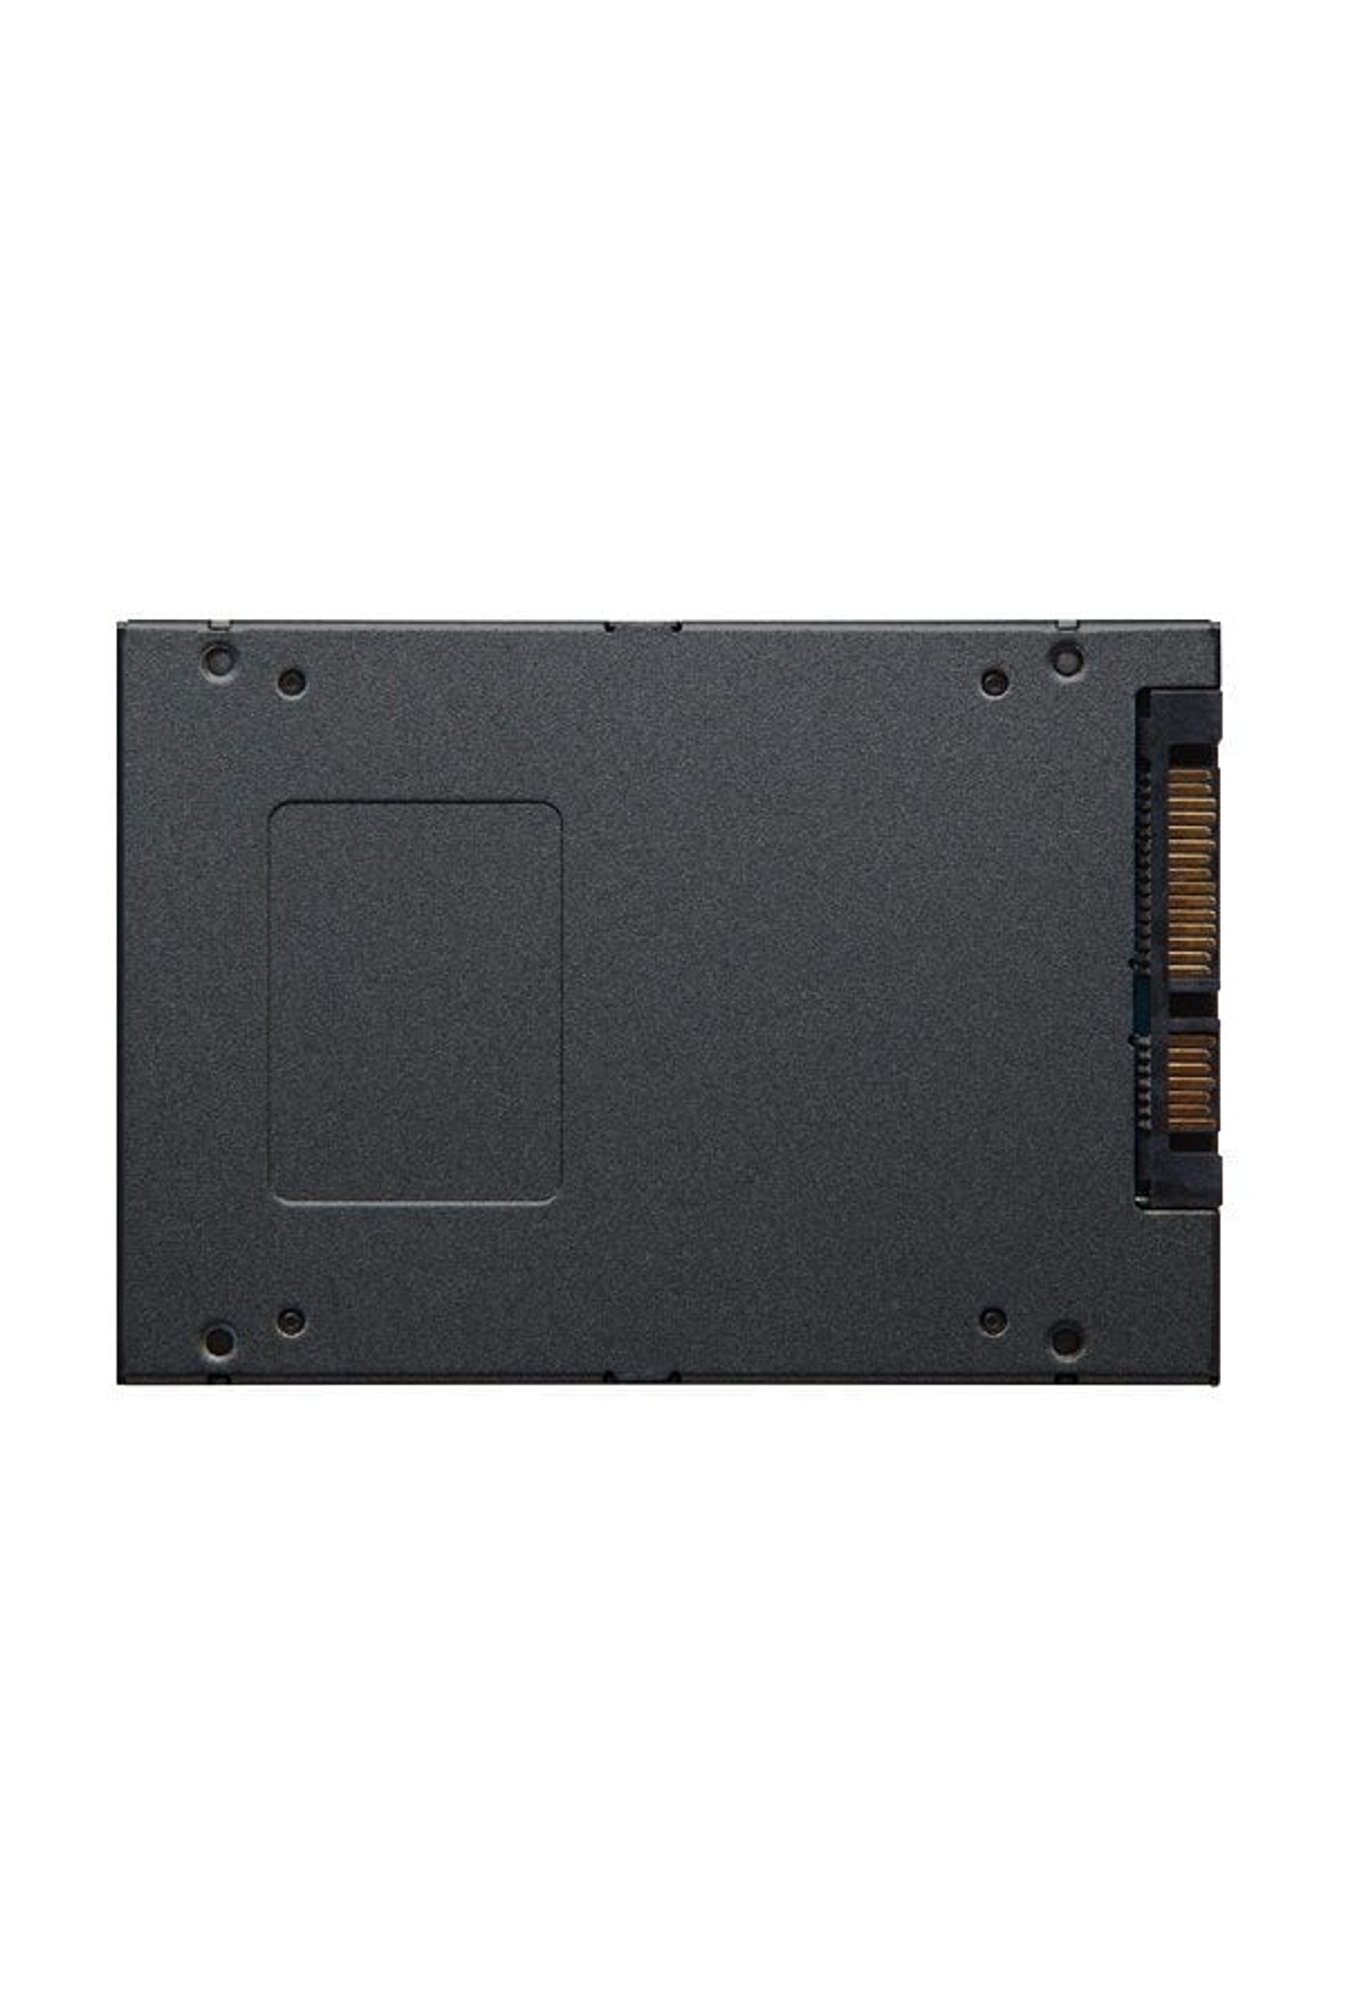 Kingston A400 SSD 240GB SATA 3 2.5 Inch Solid State Drive Dark Gray